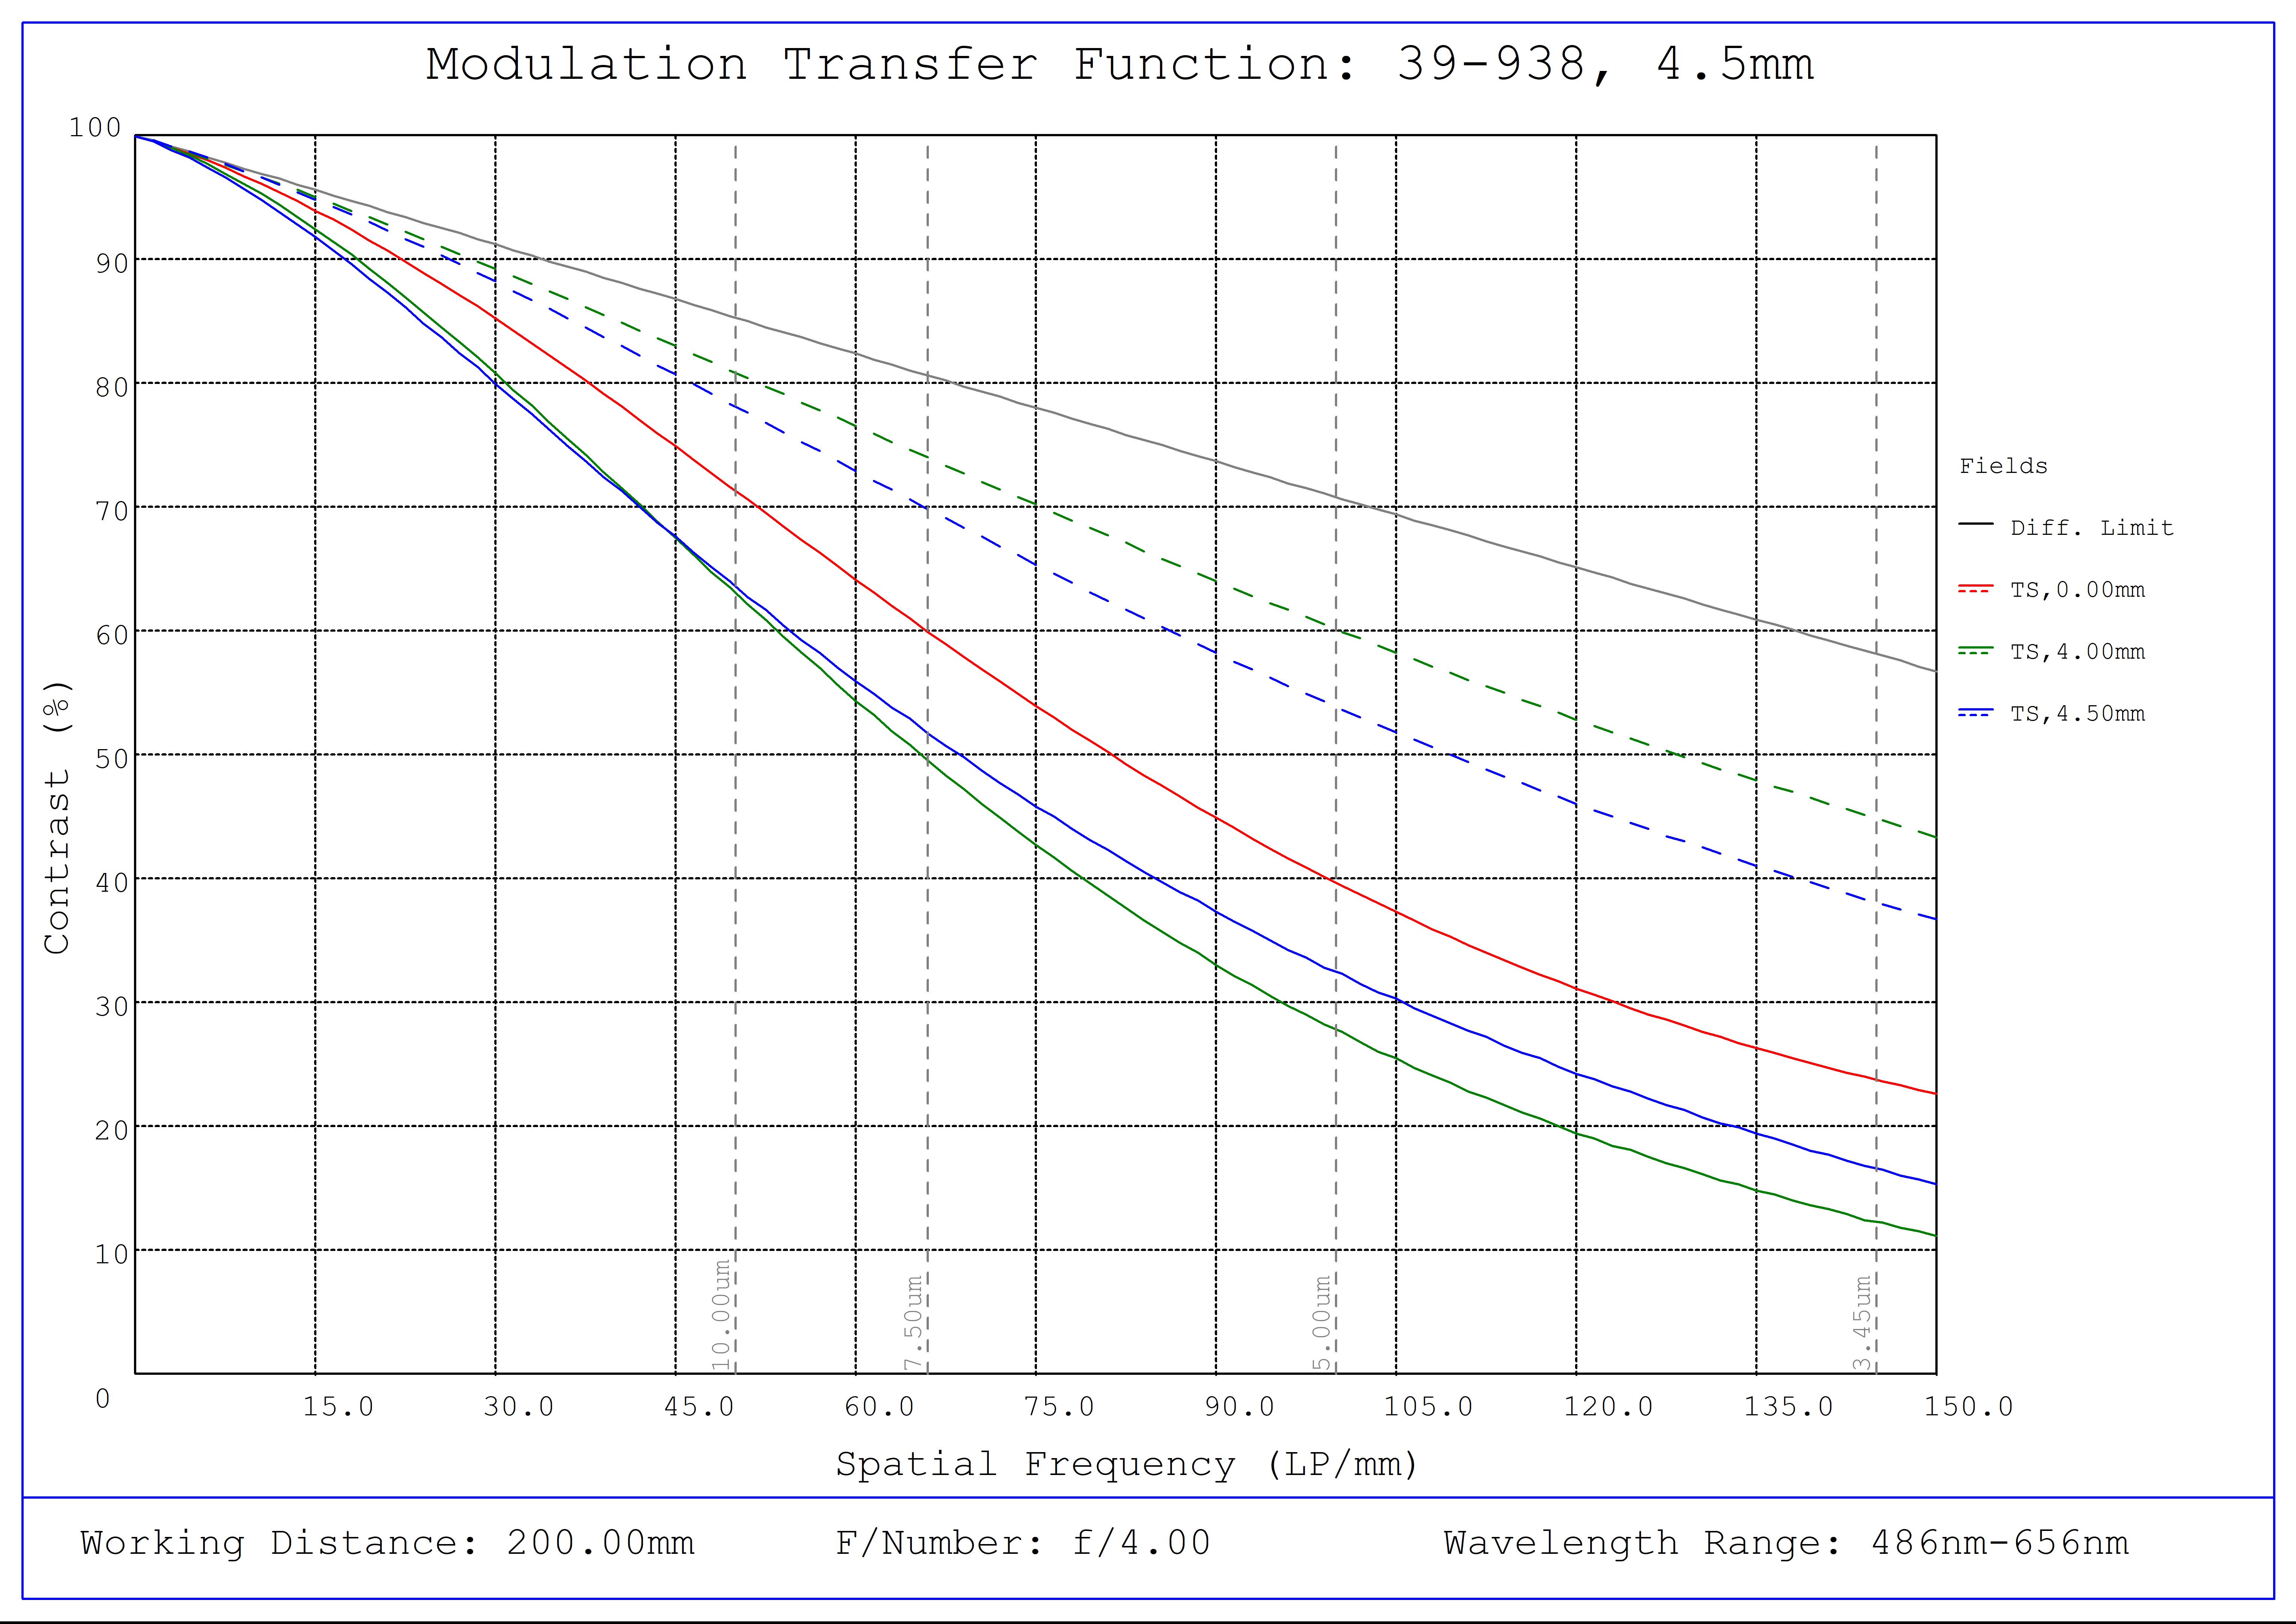 #39-938, 4.5mm C VIS-NIR Series Fixed Focal Length Lens, Modulated Transfer Function (MTF) Plot, 200mm Working Distance, f4